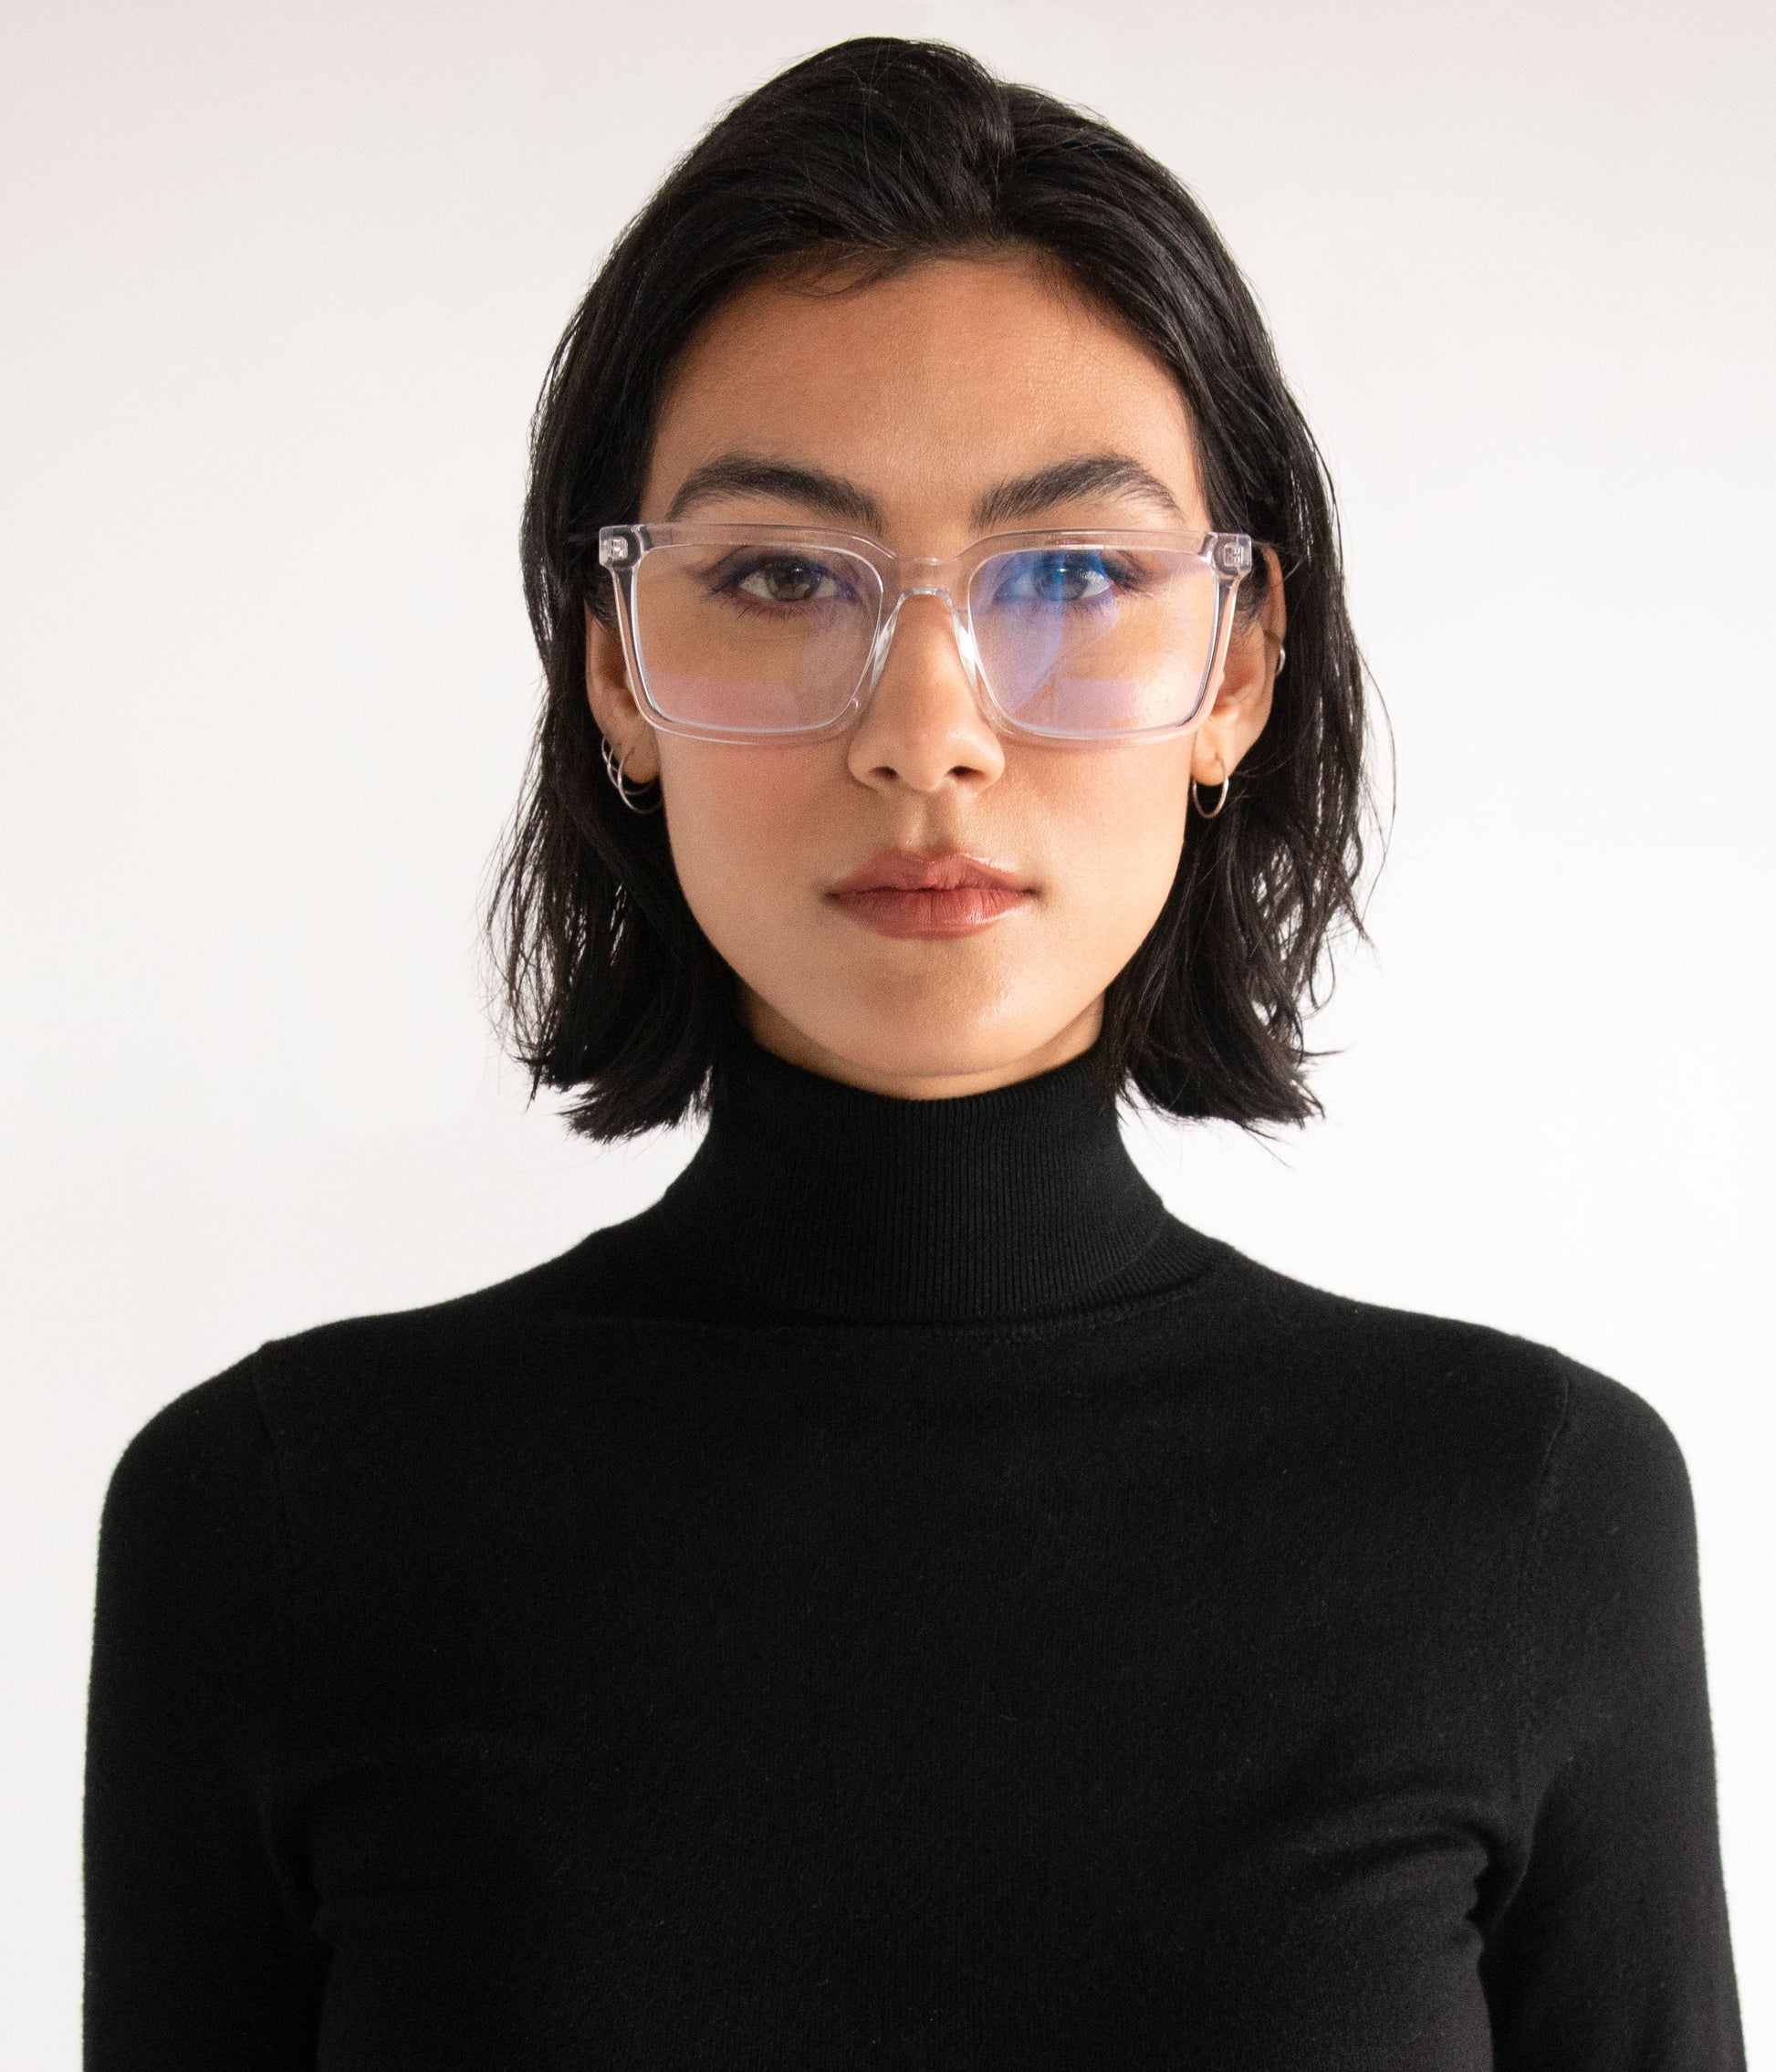 AMINE-3 Recycled Square Reading Glasses | Color: Black - variant::black